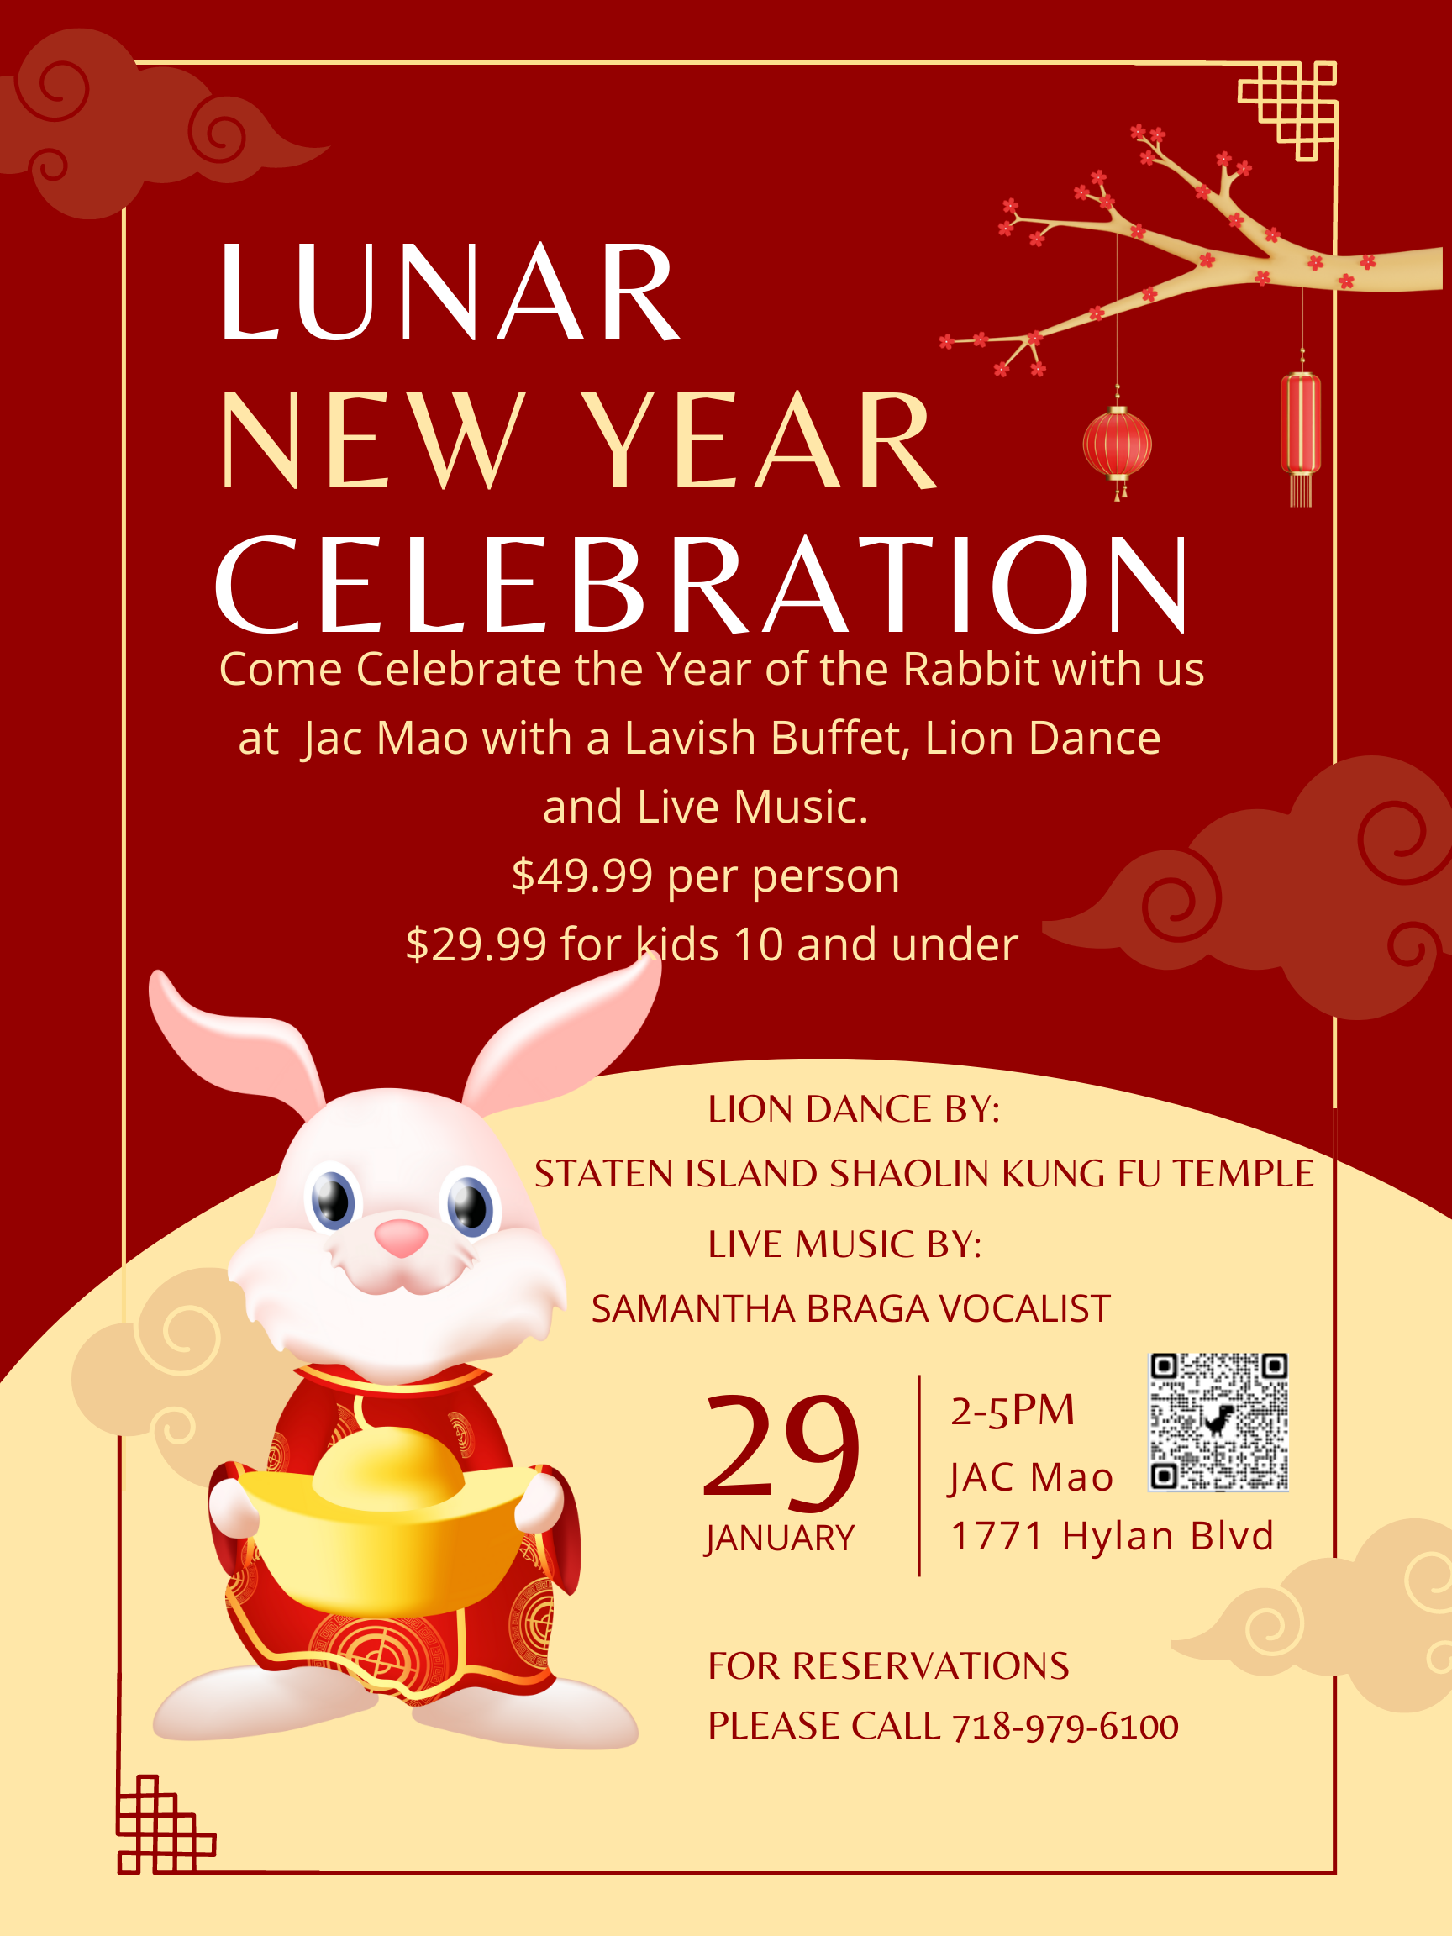 Lunar Year Celeberation